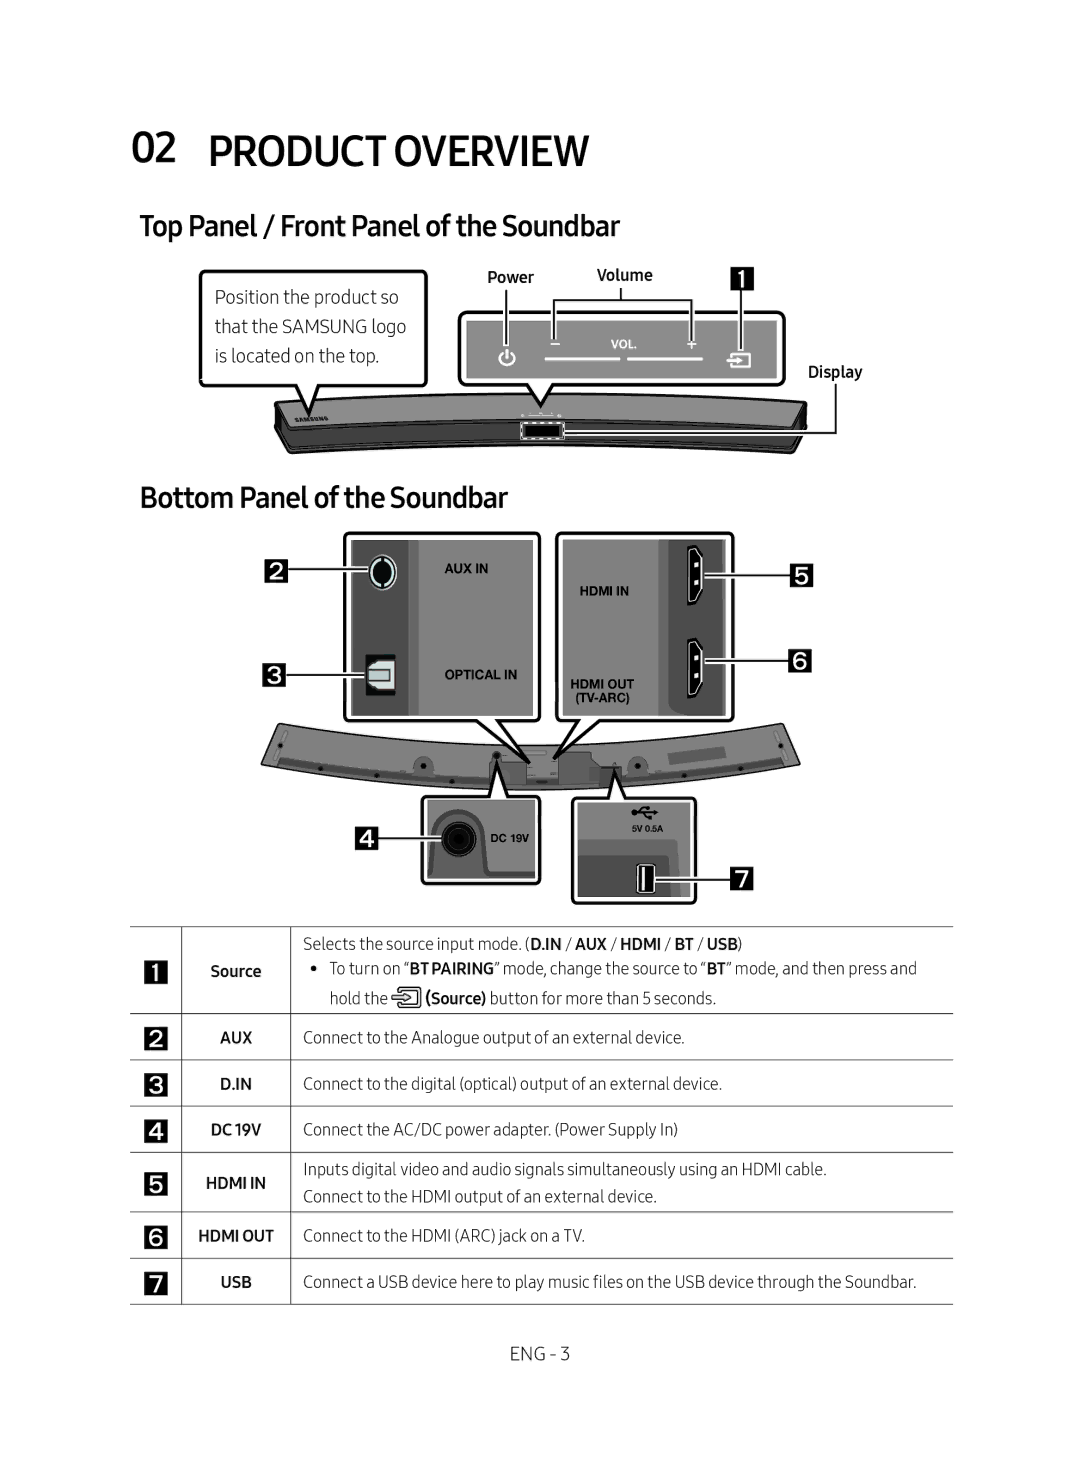 Samsung HW-M4500/EN manual Product Overview, Top Panel / Front Panel of the Soundbar, Bottom Panel of the Soundbar, Display 